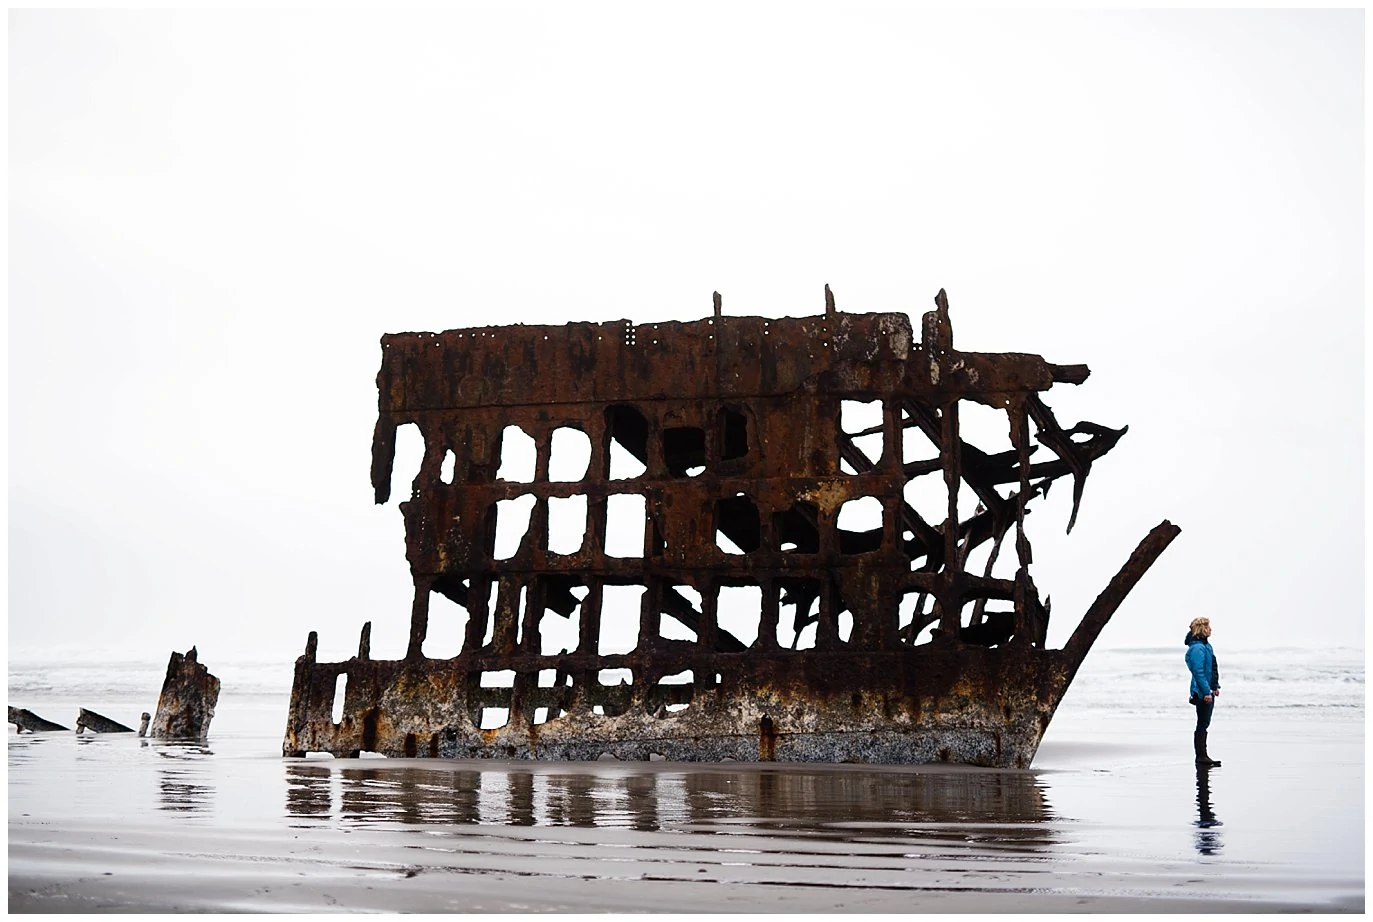 The Wreck of Peter Iredale oregon coast portrait photo